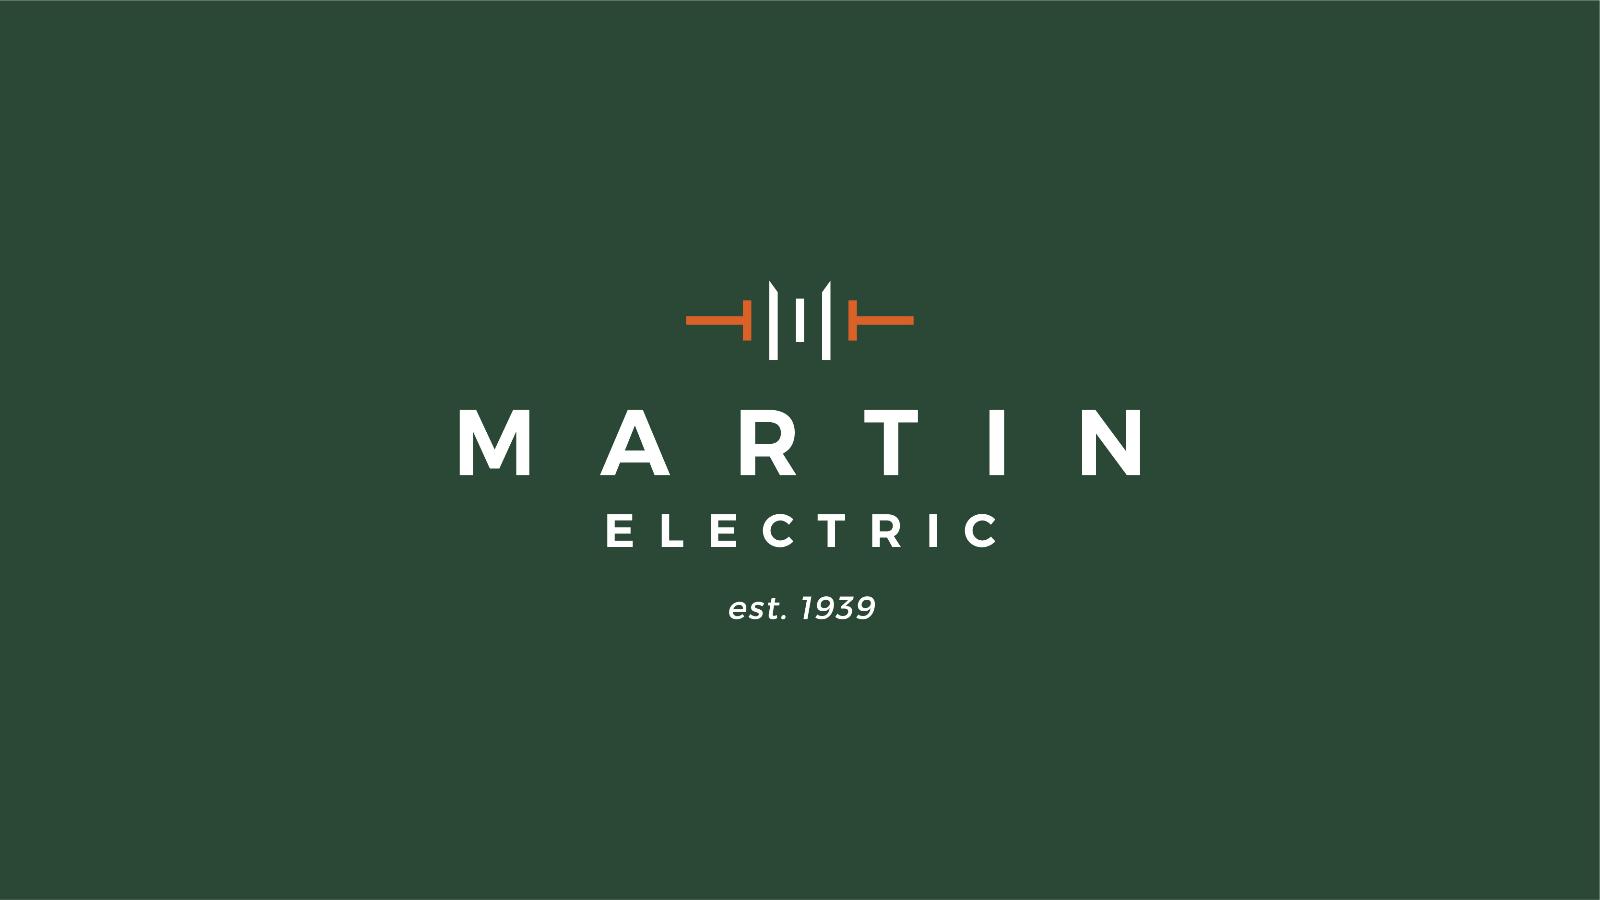 Martin Electric | logo on green